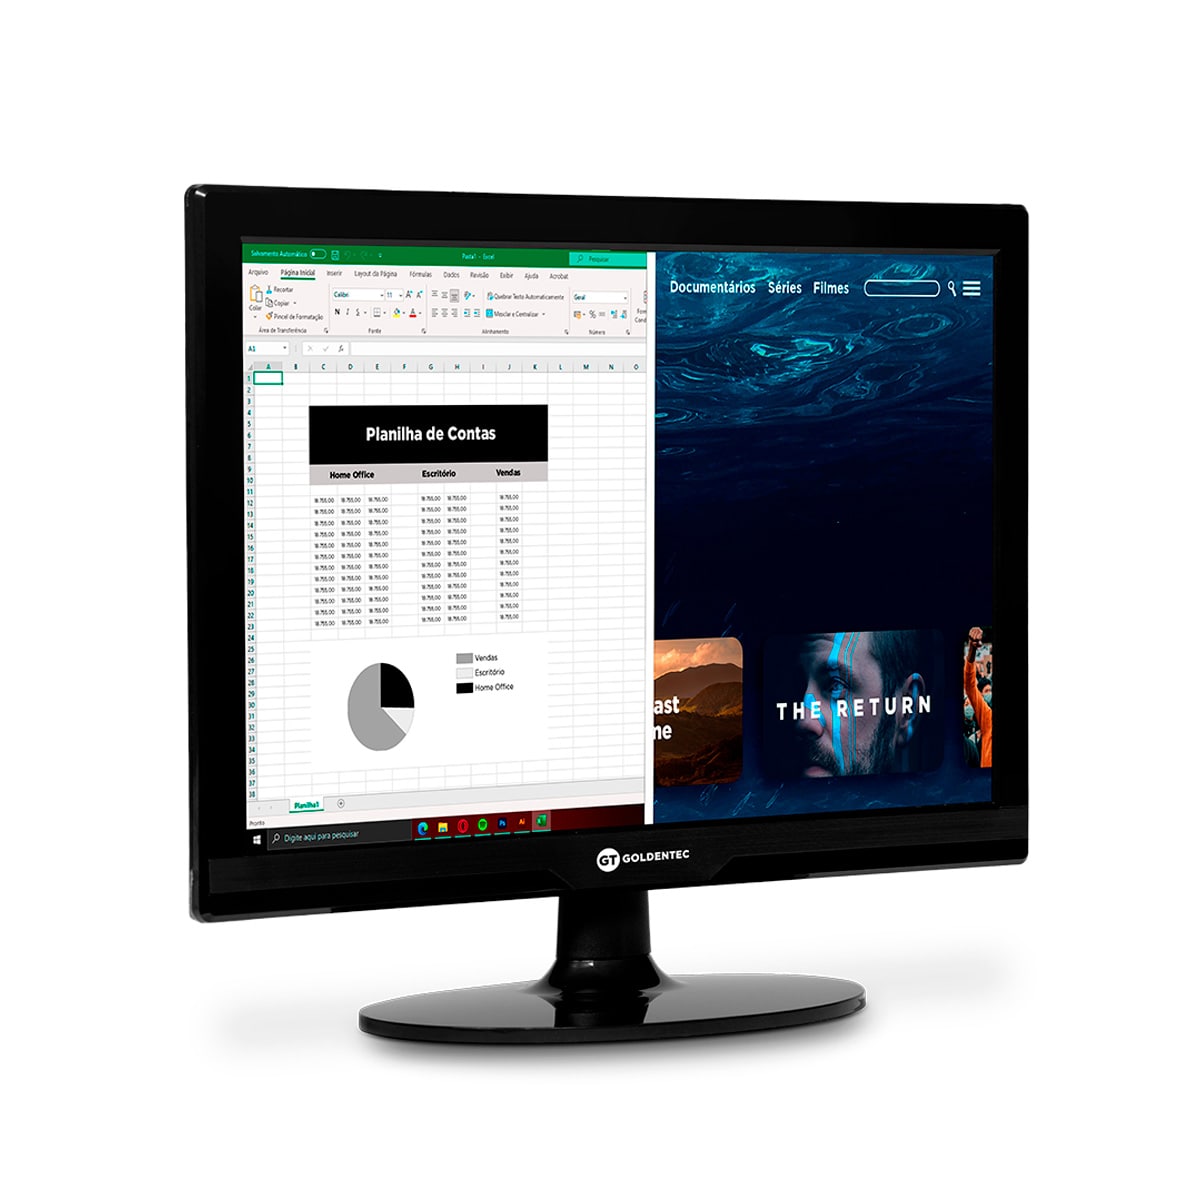 Monitor LED 15.4 Widescreen com HDMI | Goldentec